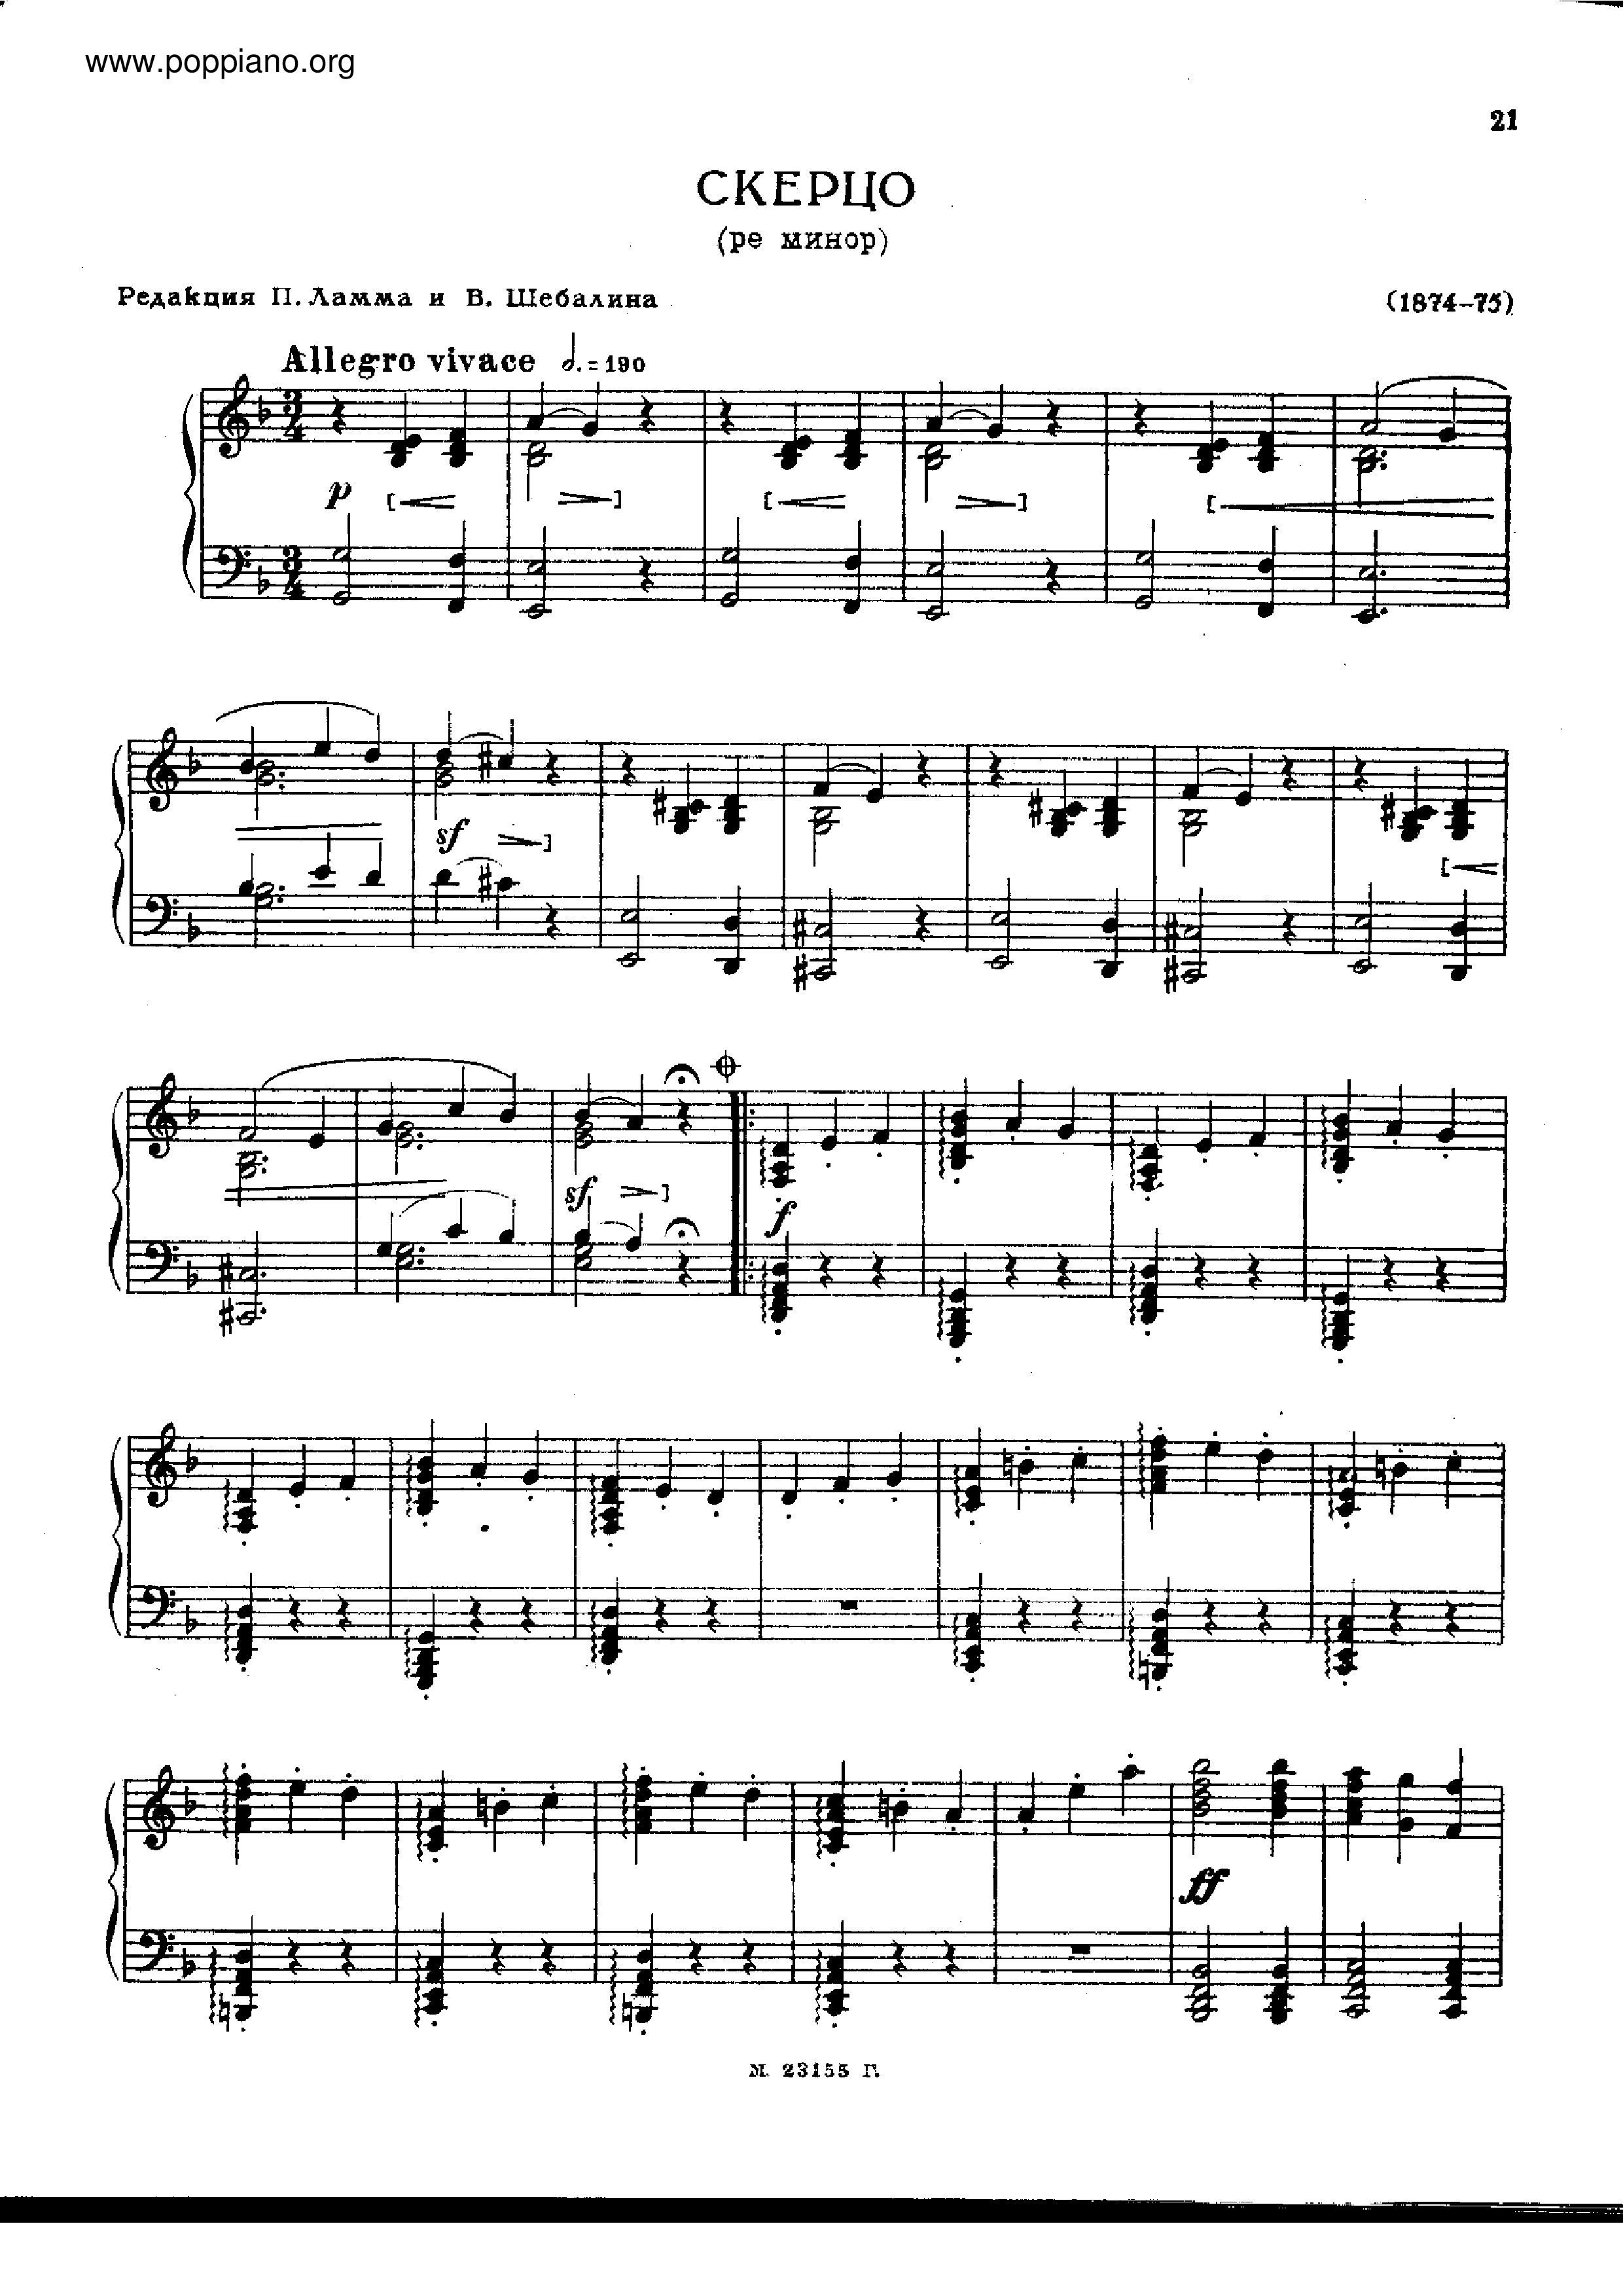 No.4 in D minor Score